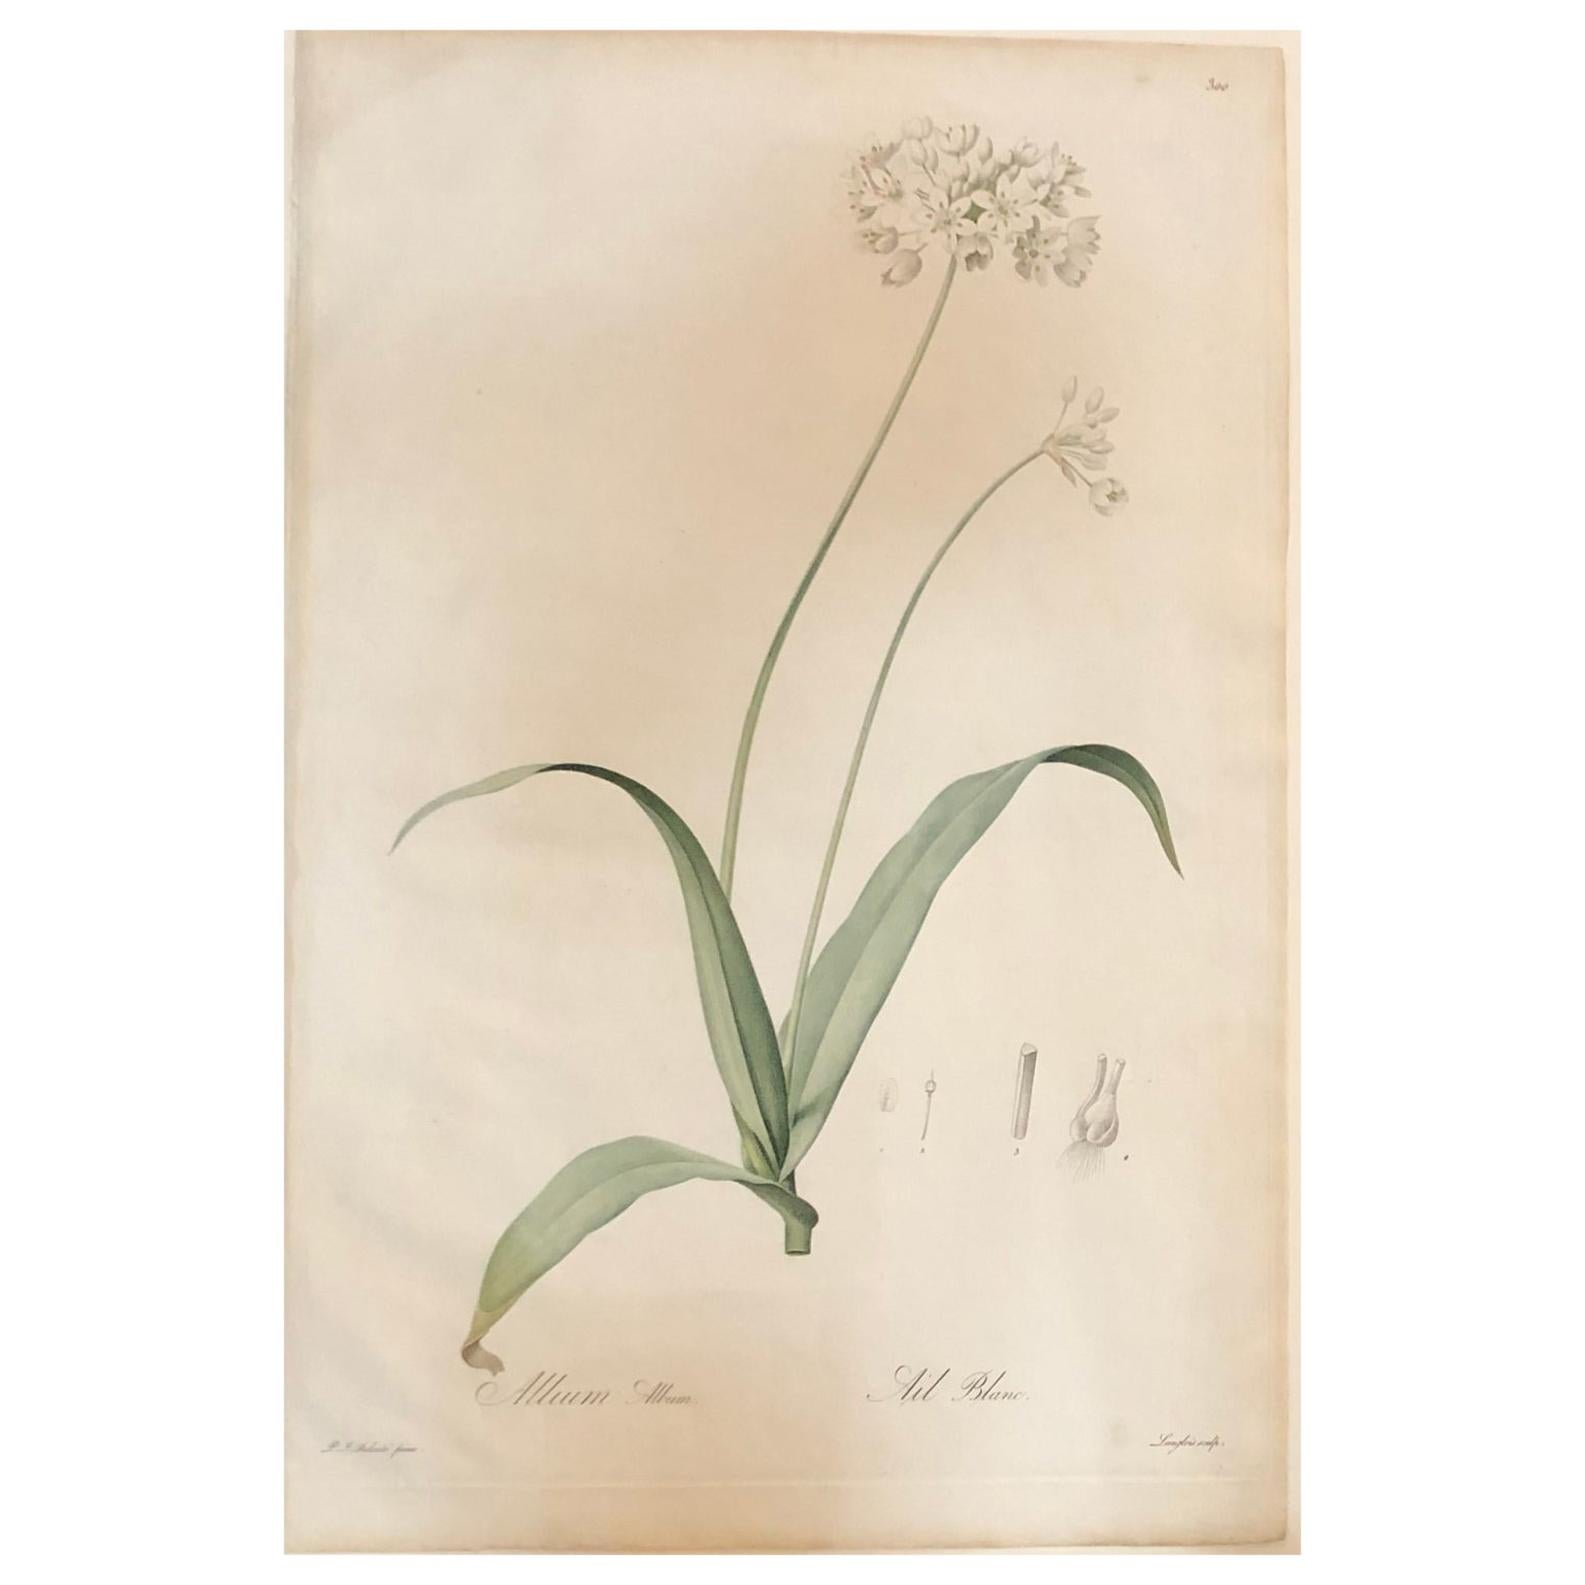 Allium Album Hand Painted Colored Engraving Signed P.J. Redoute